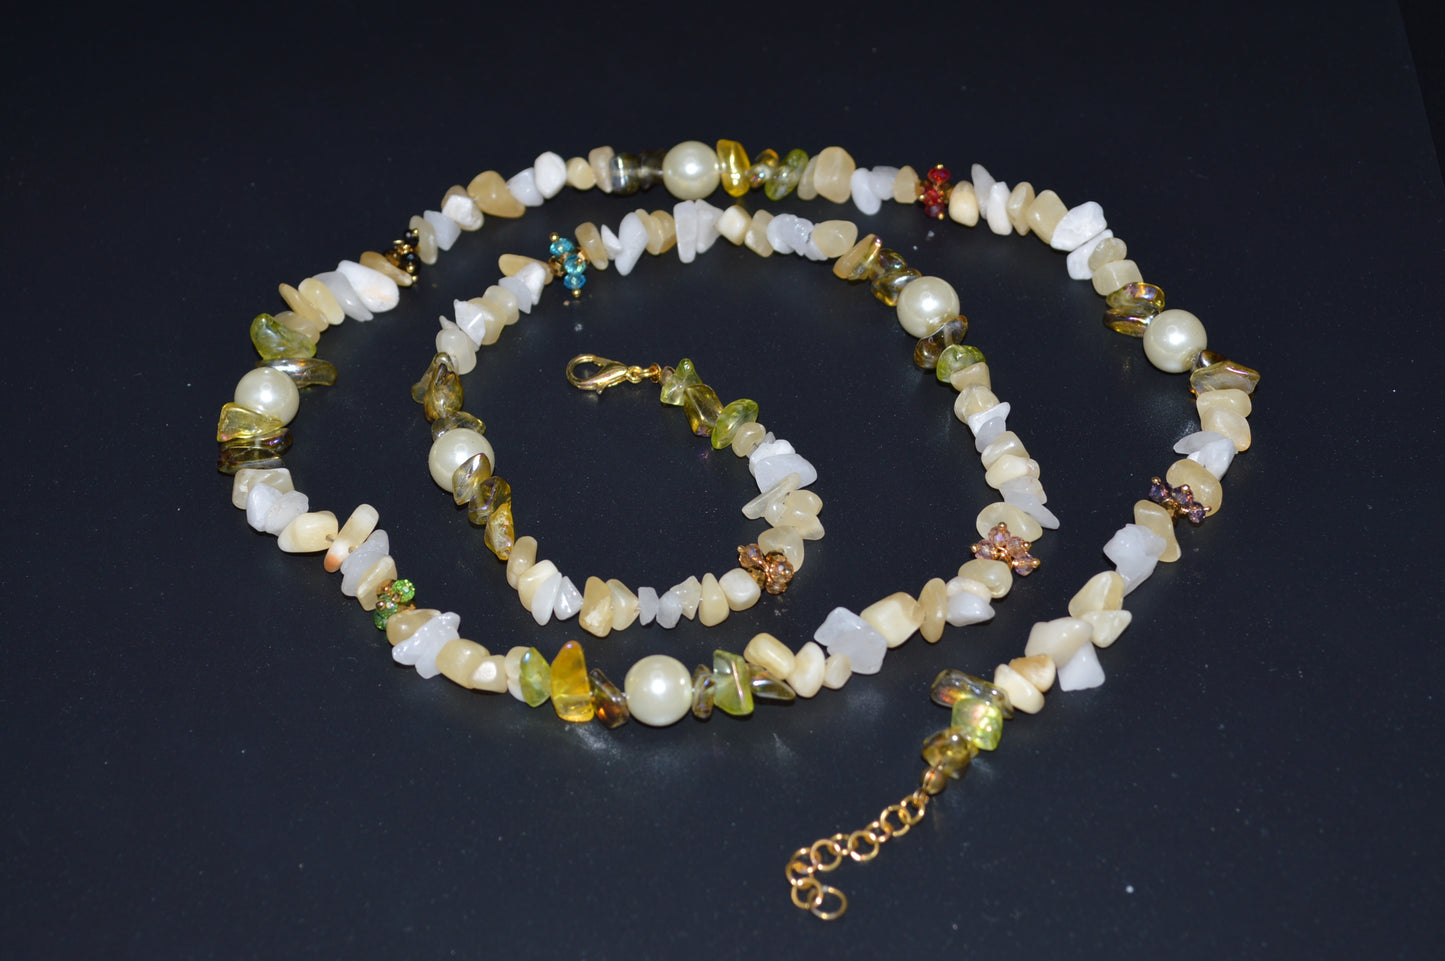 Aragonite and Snow Quartz Necklace and Earring Set (Cream)